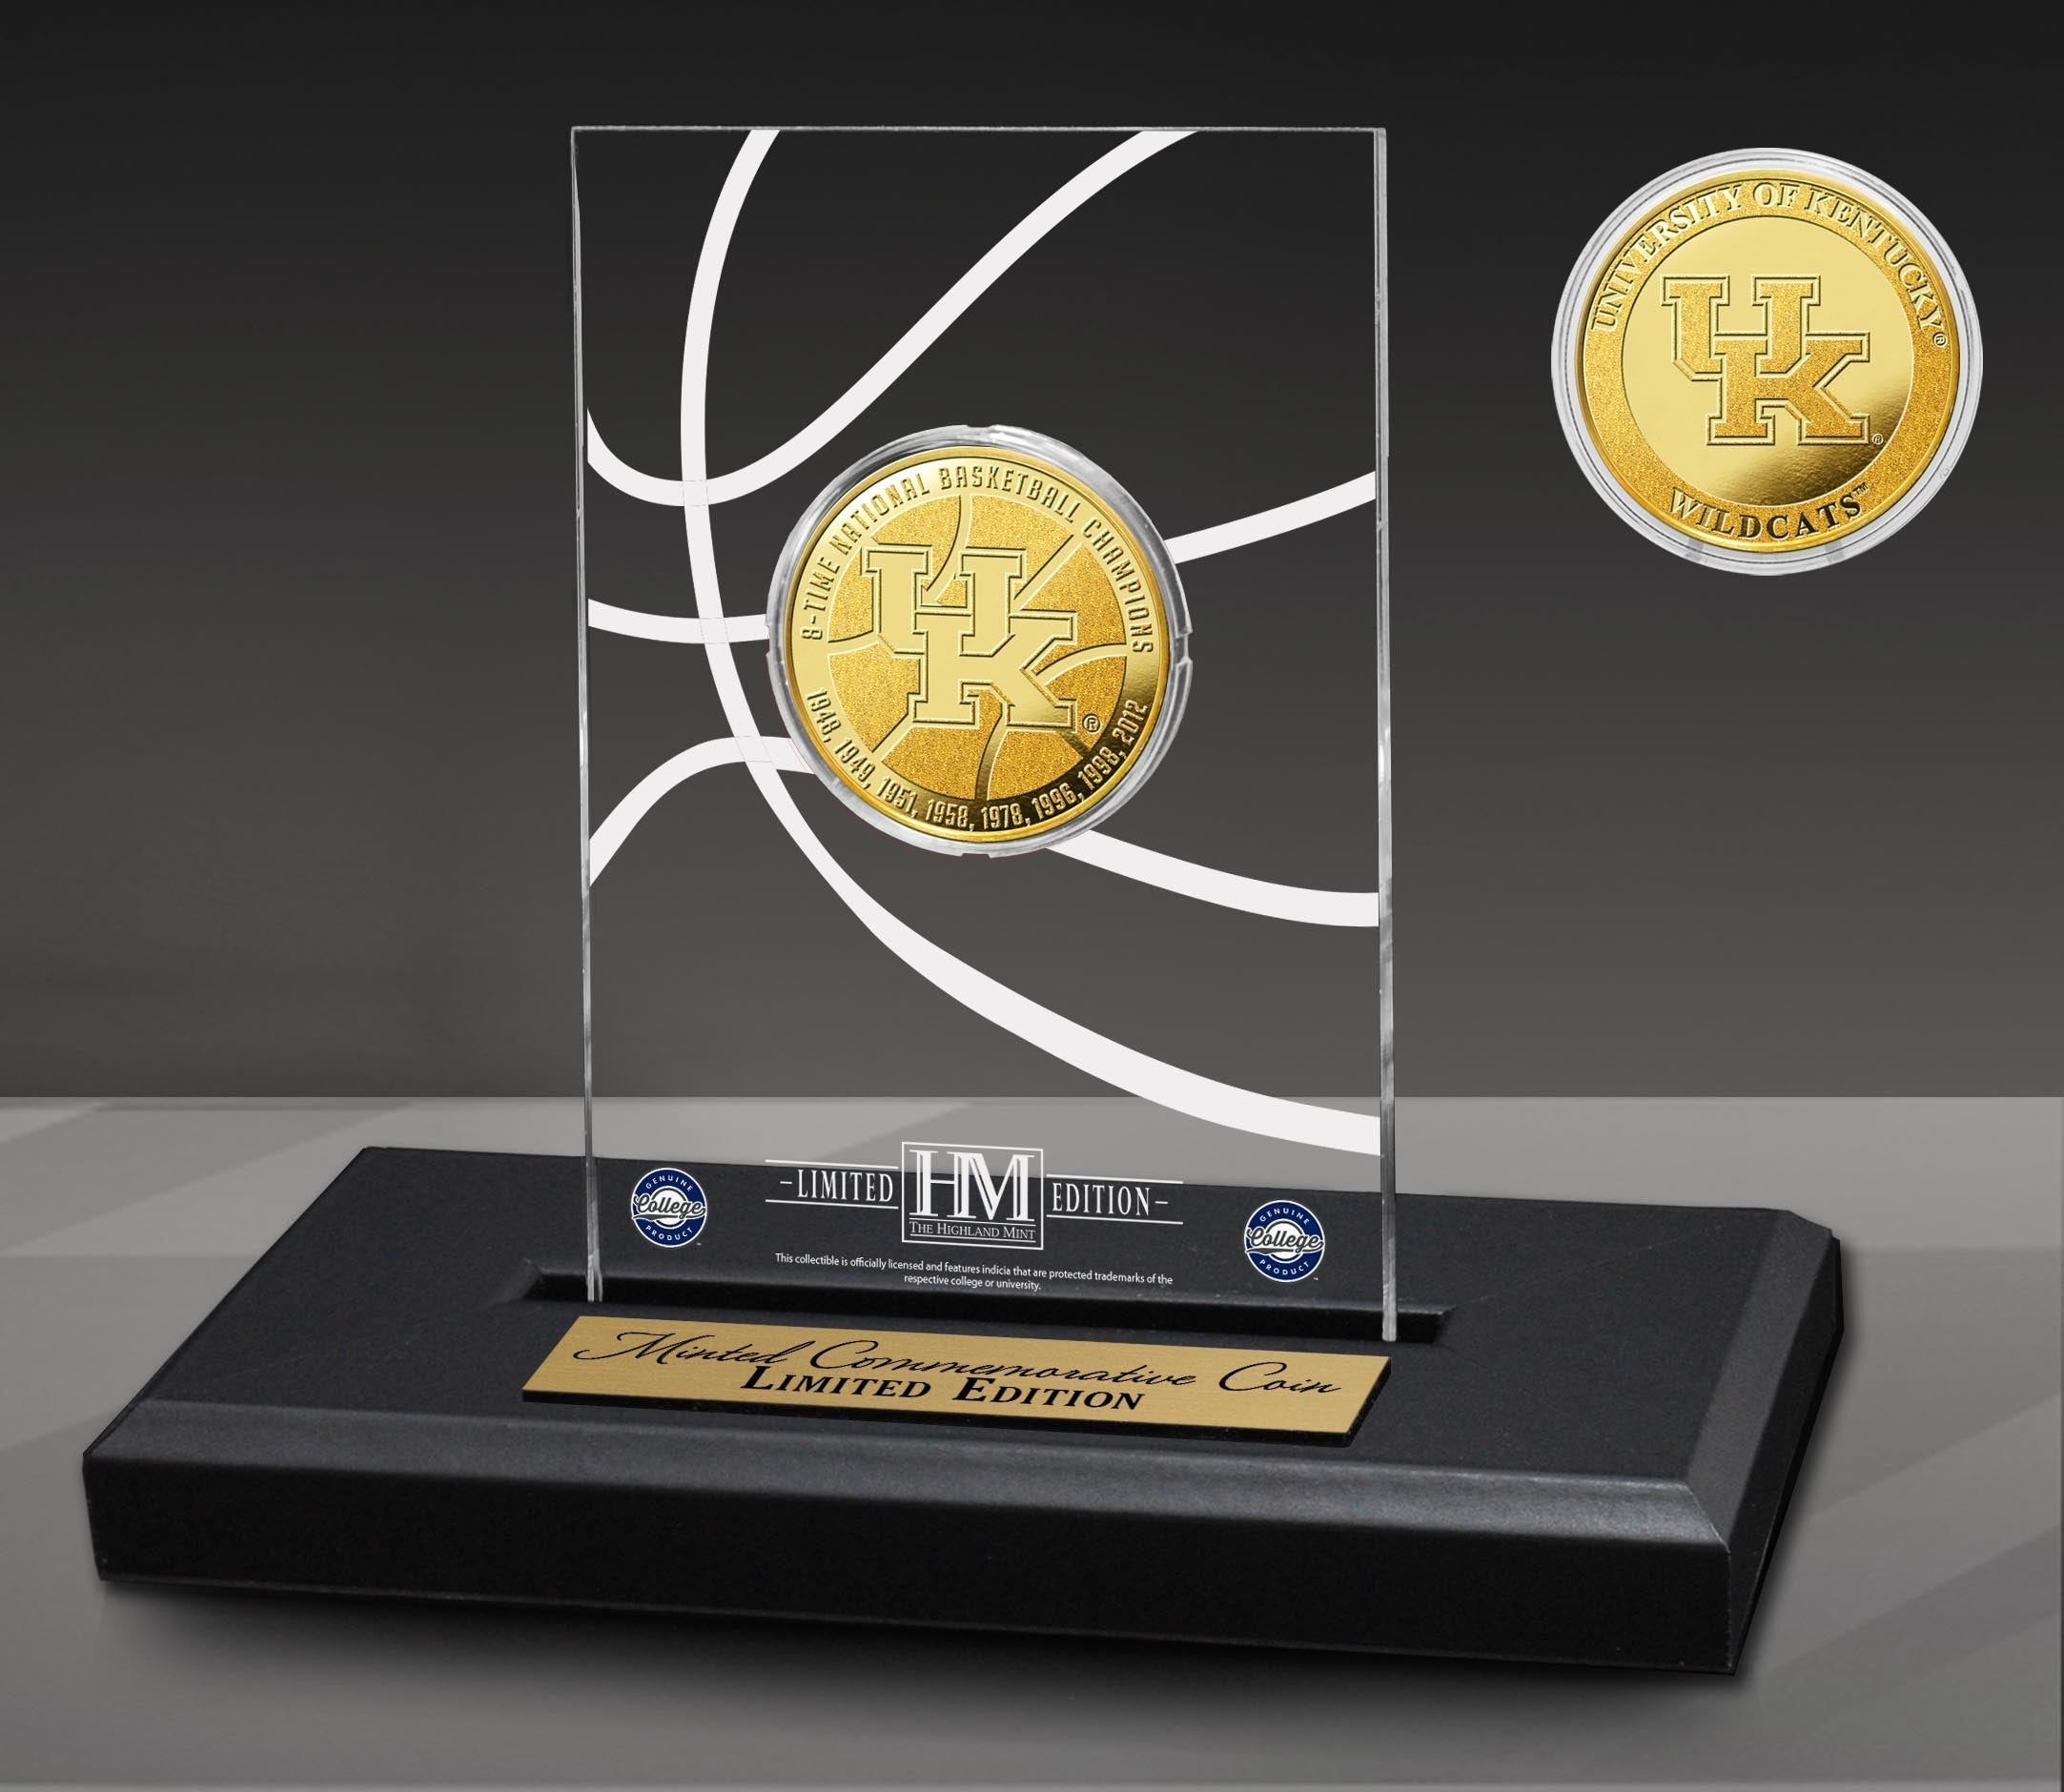 University of Kentucky Wildcats Basketball 8-Time National Champions Gold Coin in AcrylicÃƒâ€šÃ‚Â Display